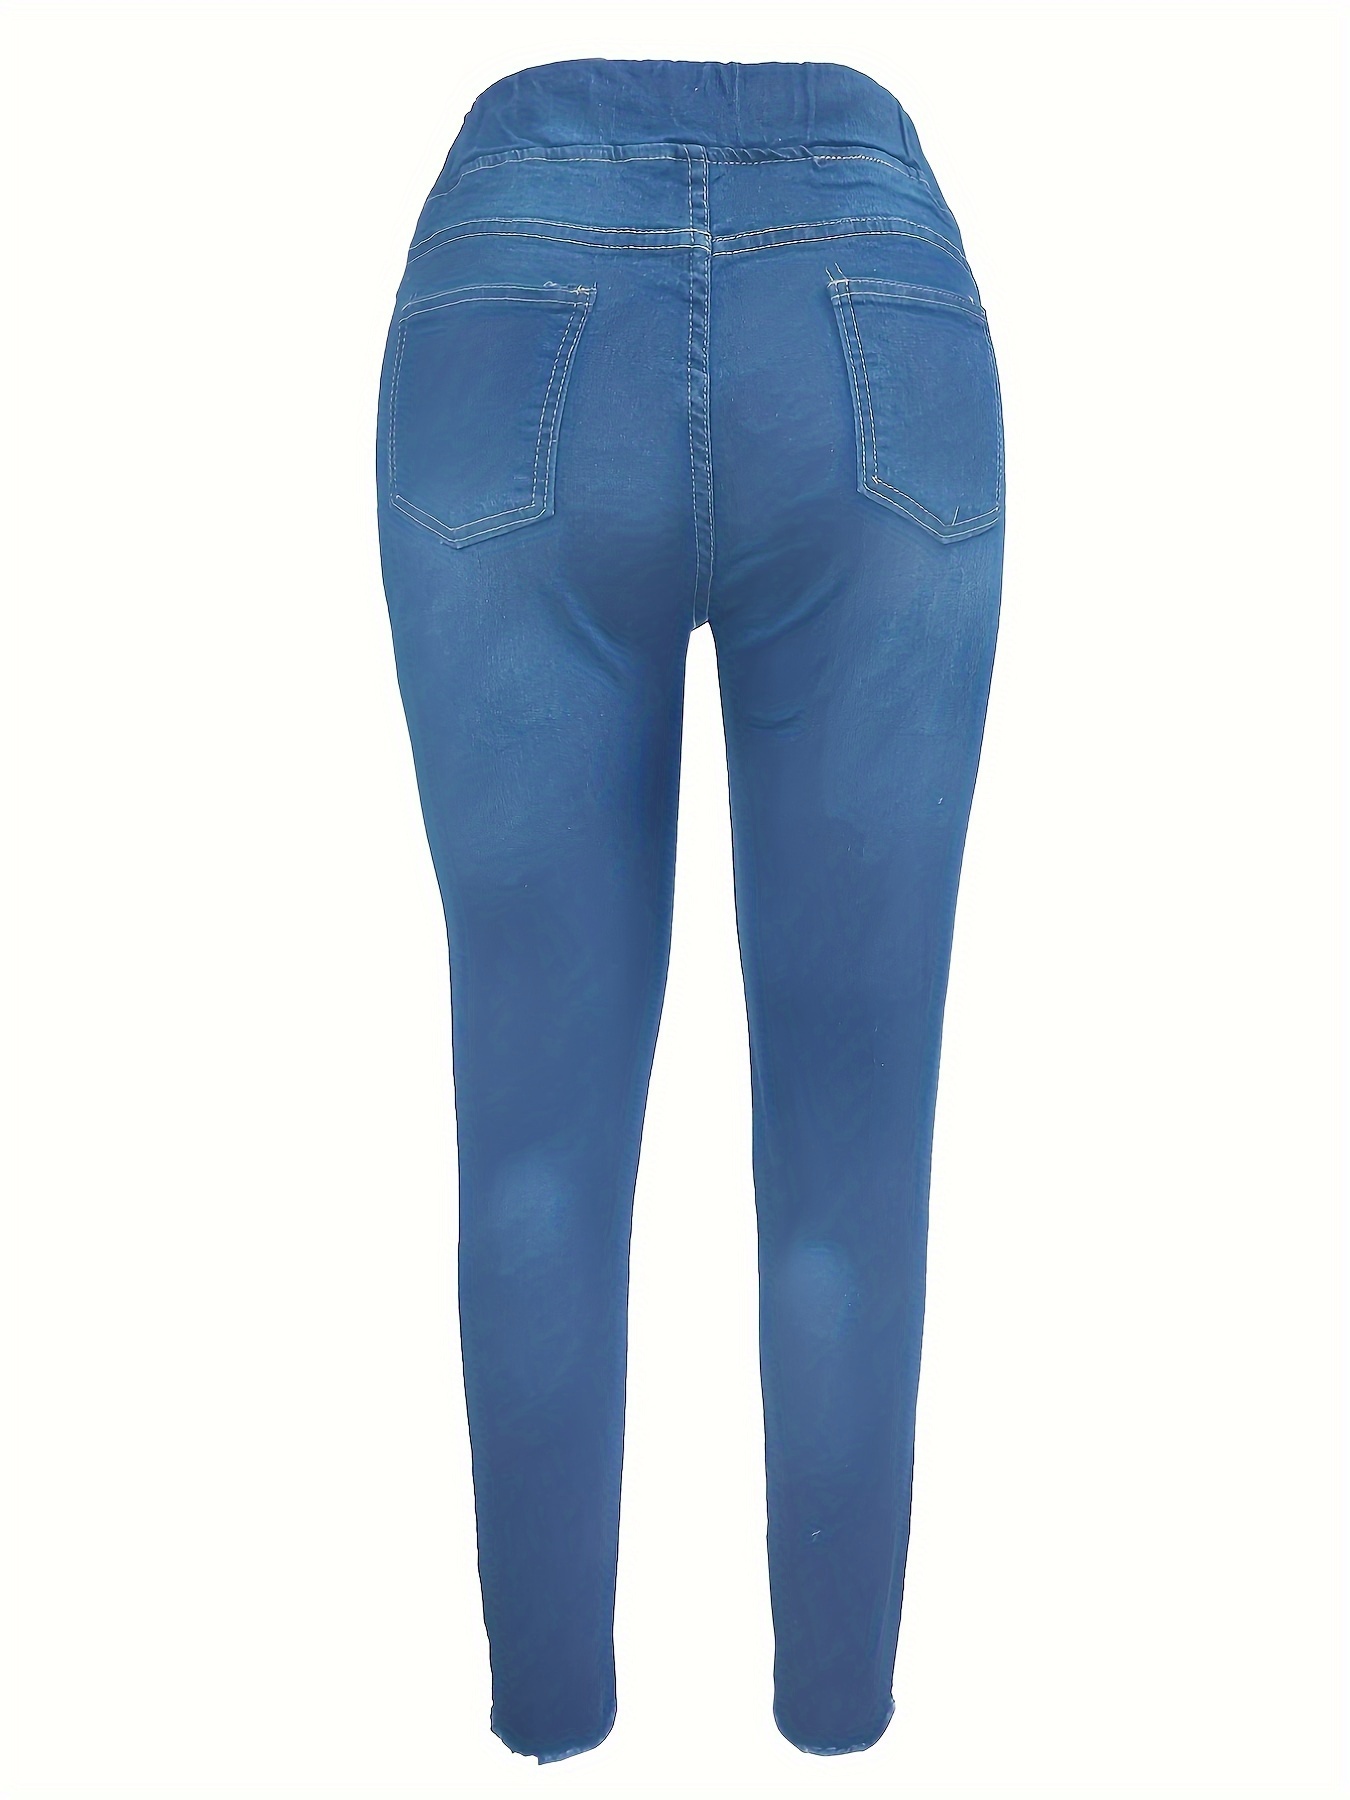 Kids Girls Denim Ripped Light Blue Skinny Jeans Fashion Stretchy Pants  Jeggings 